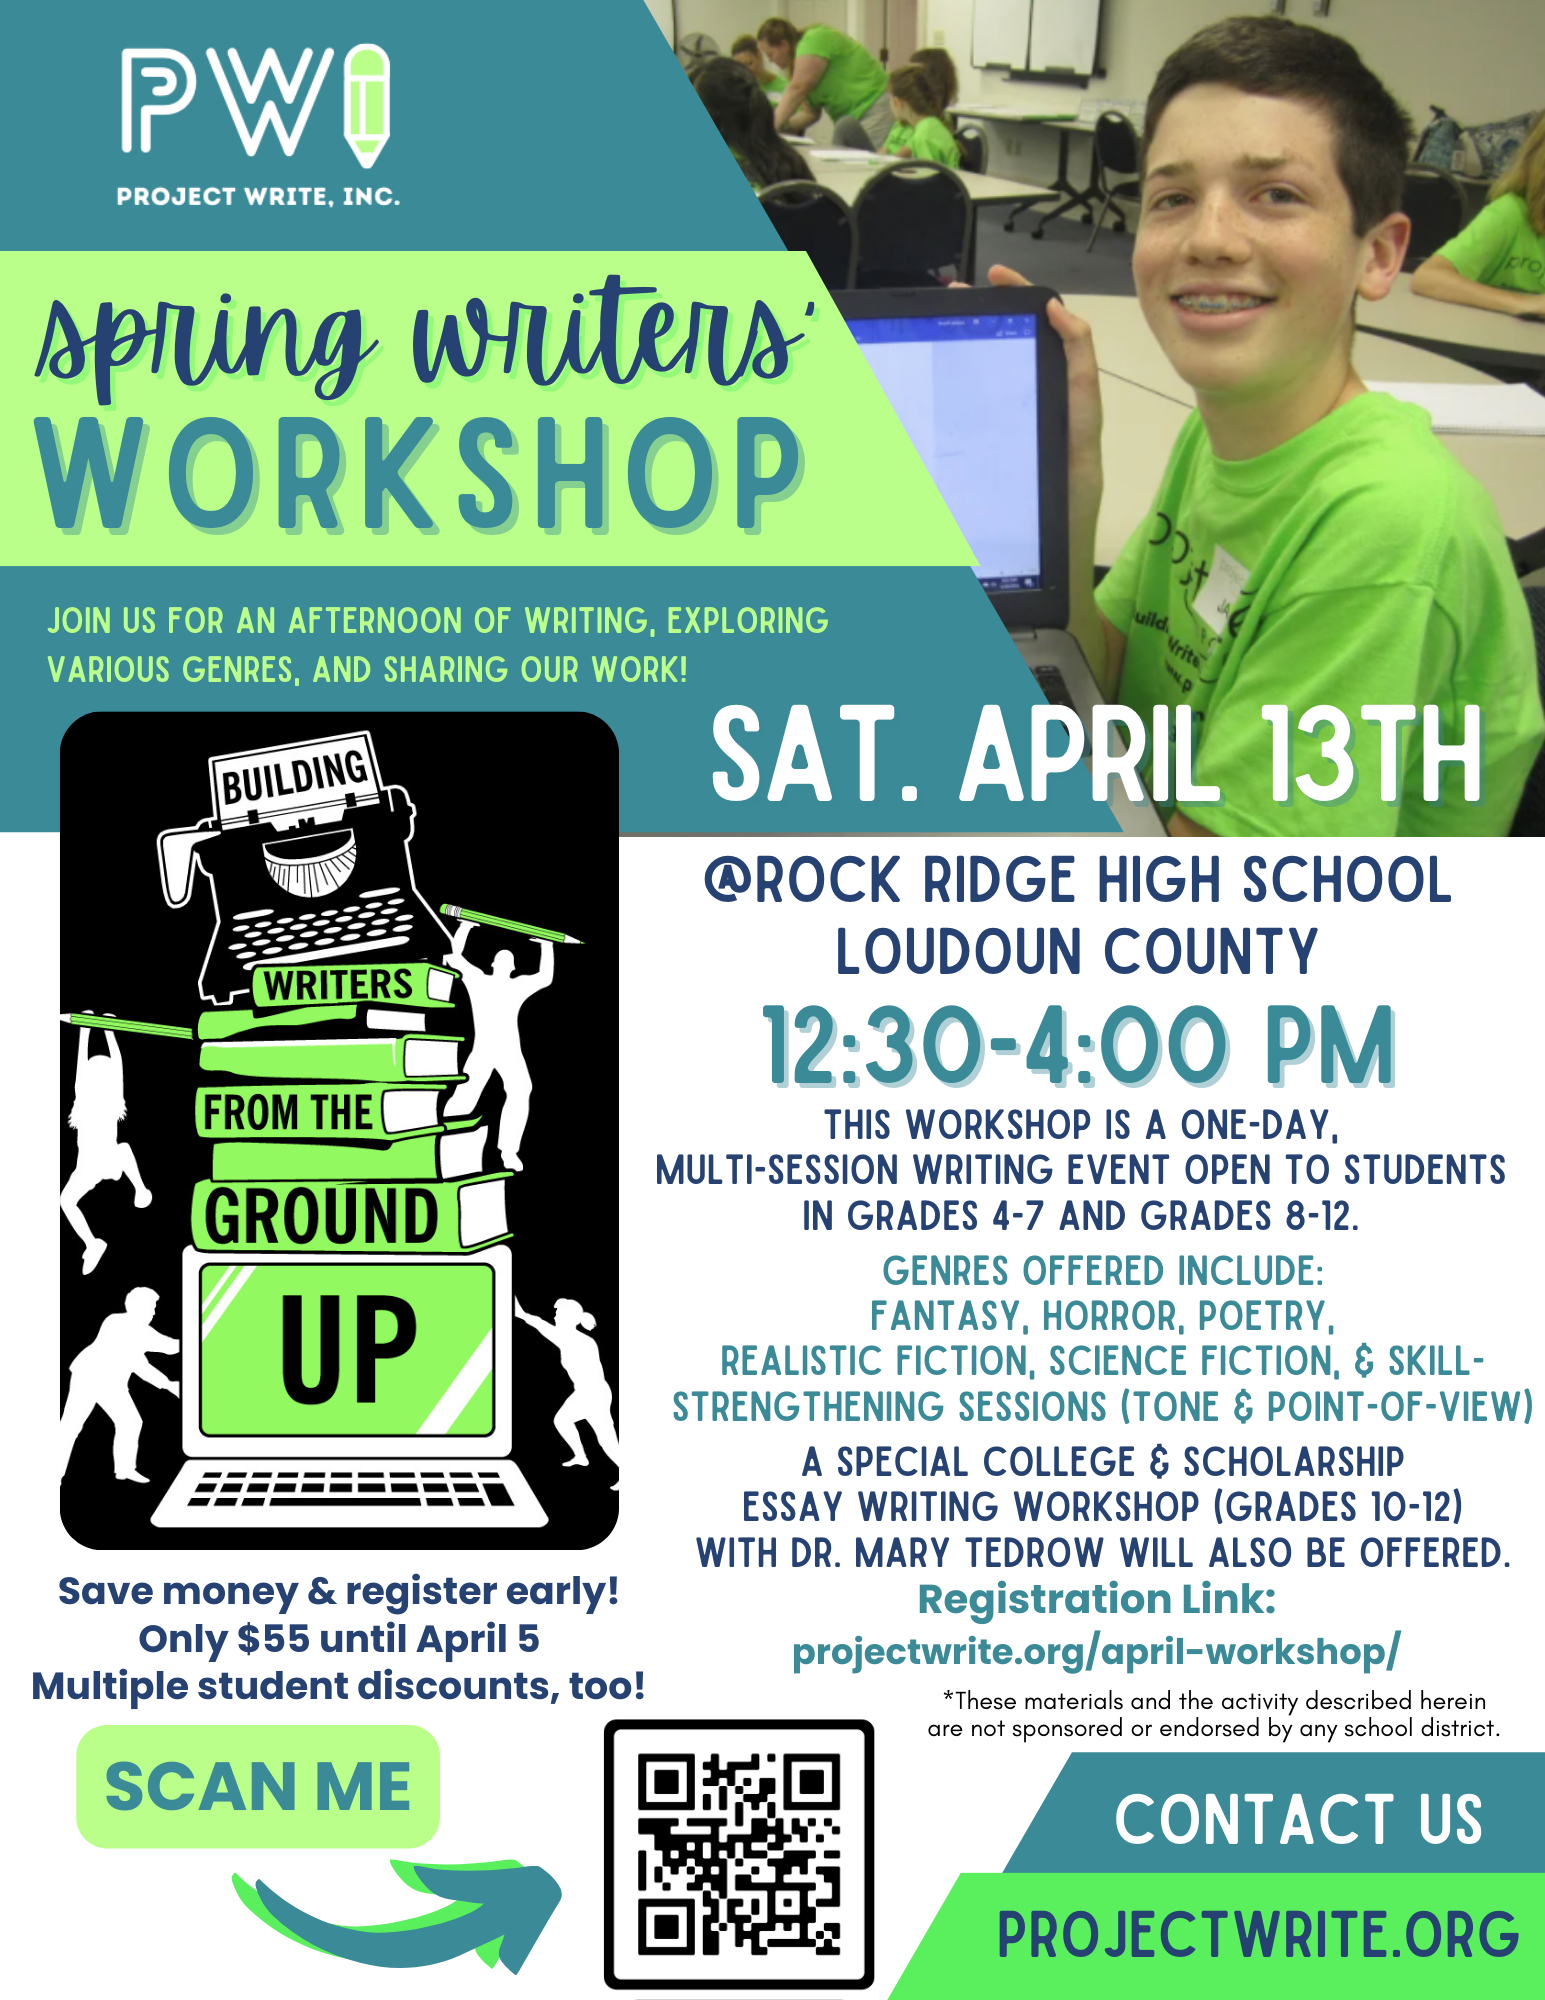 Upcoming workshop at Rock Ridge High School on Saturday, April 13.